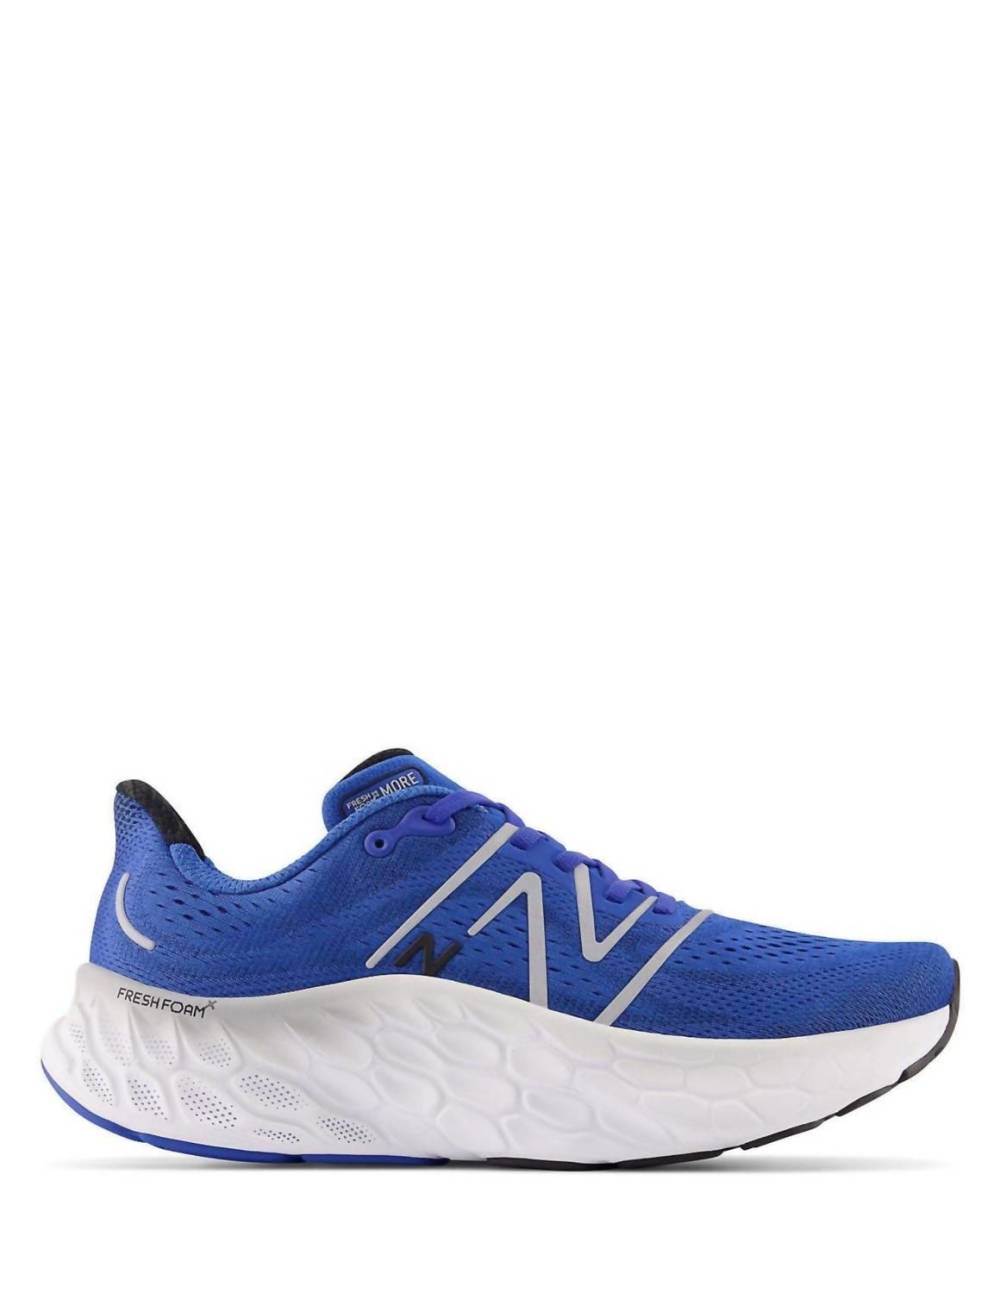 New Balance - Men's Fresh Foam More V4 Running Shoes - 2E/wide Width